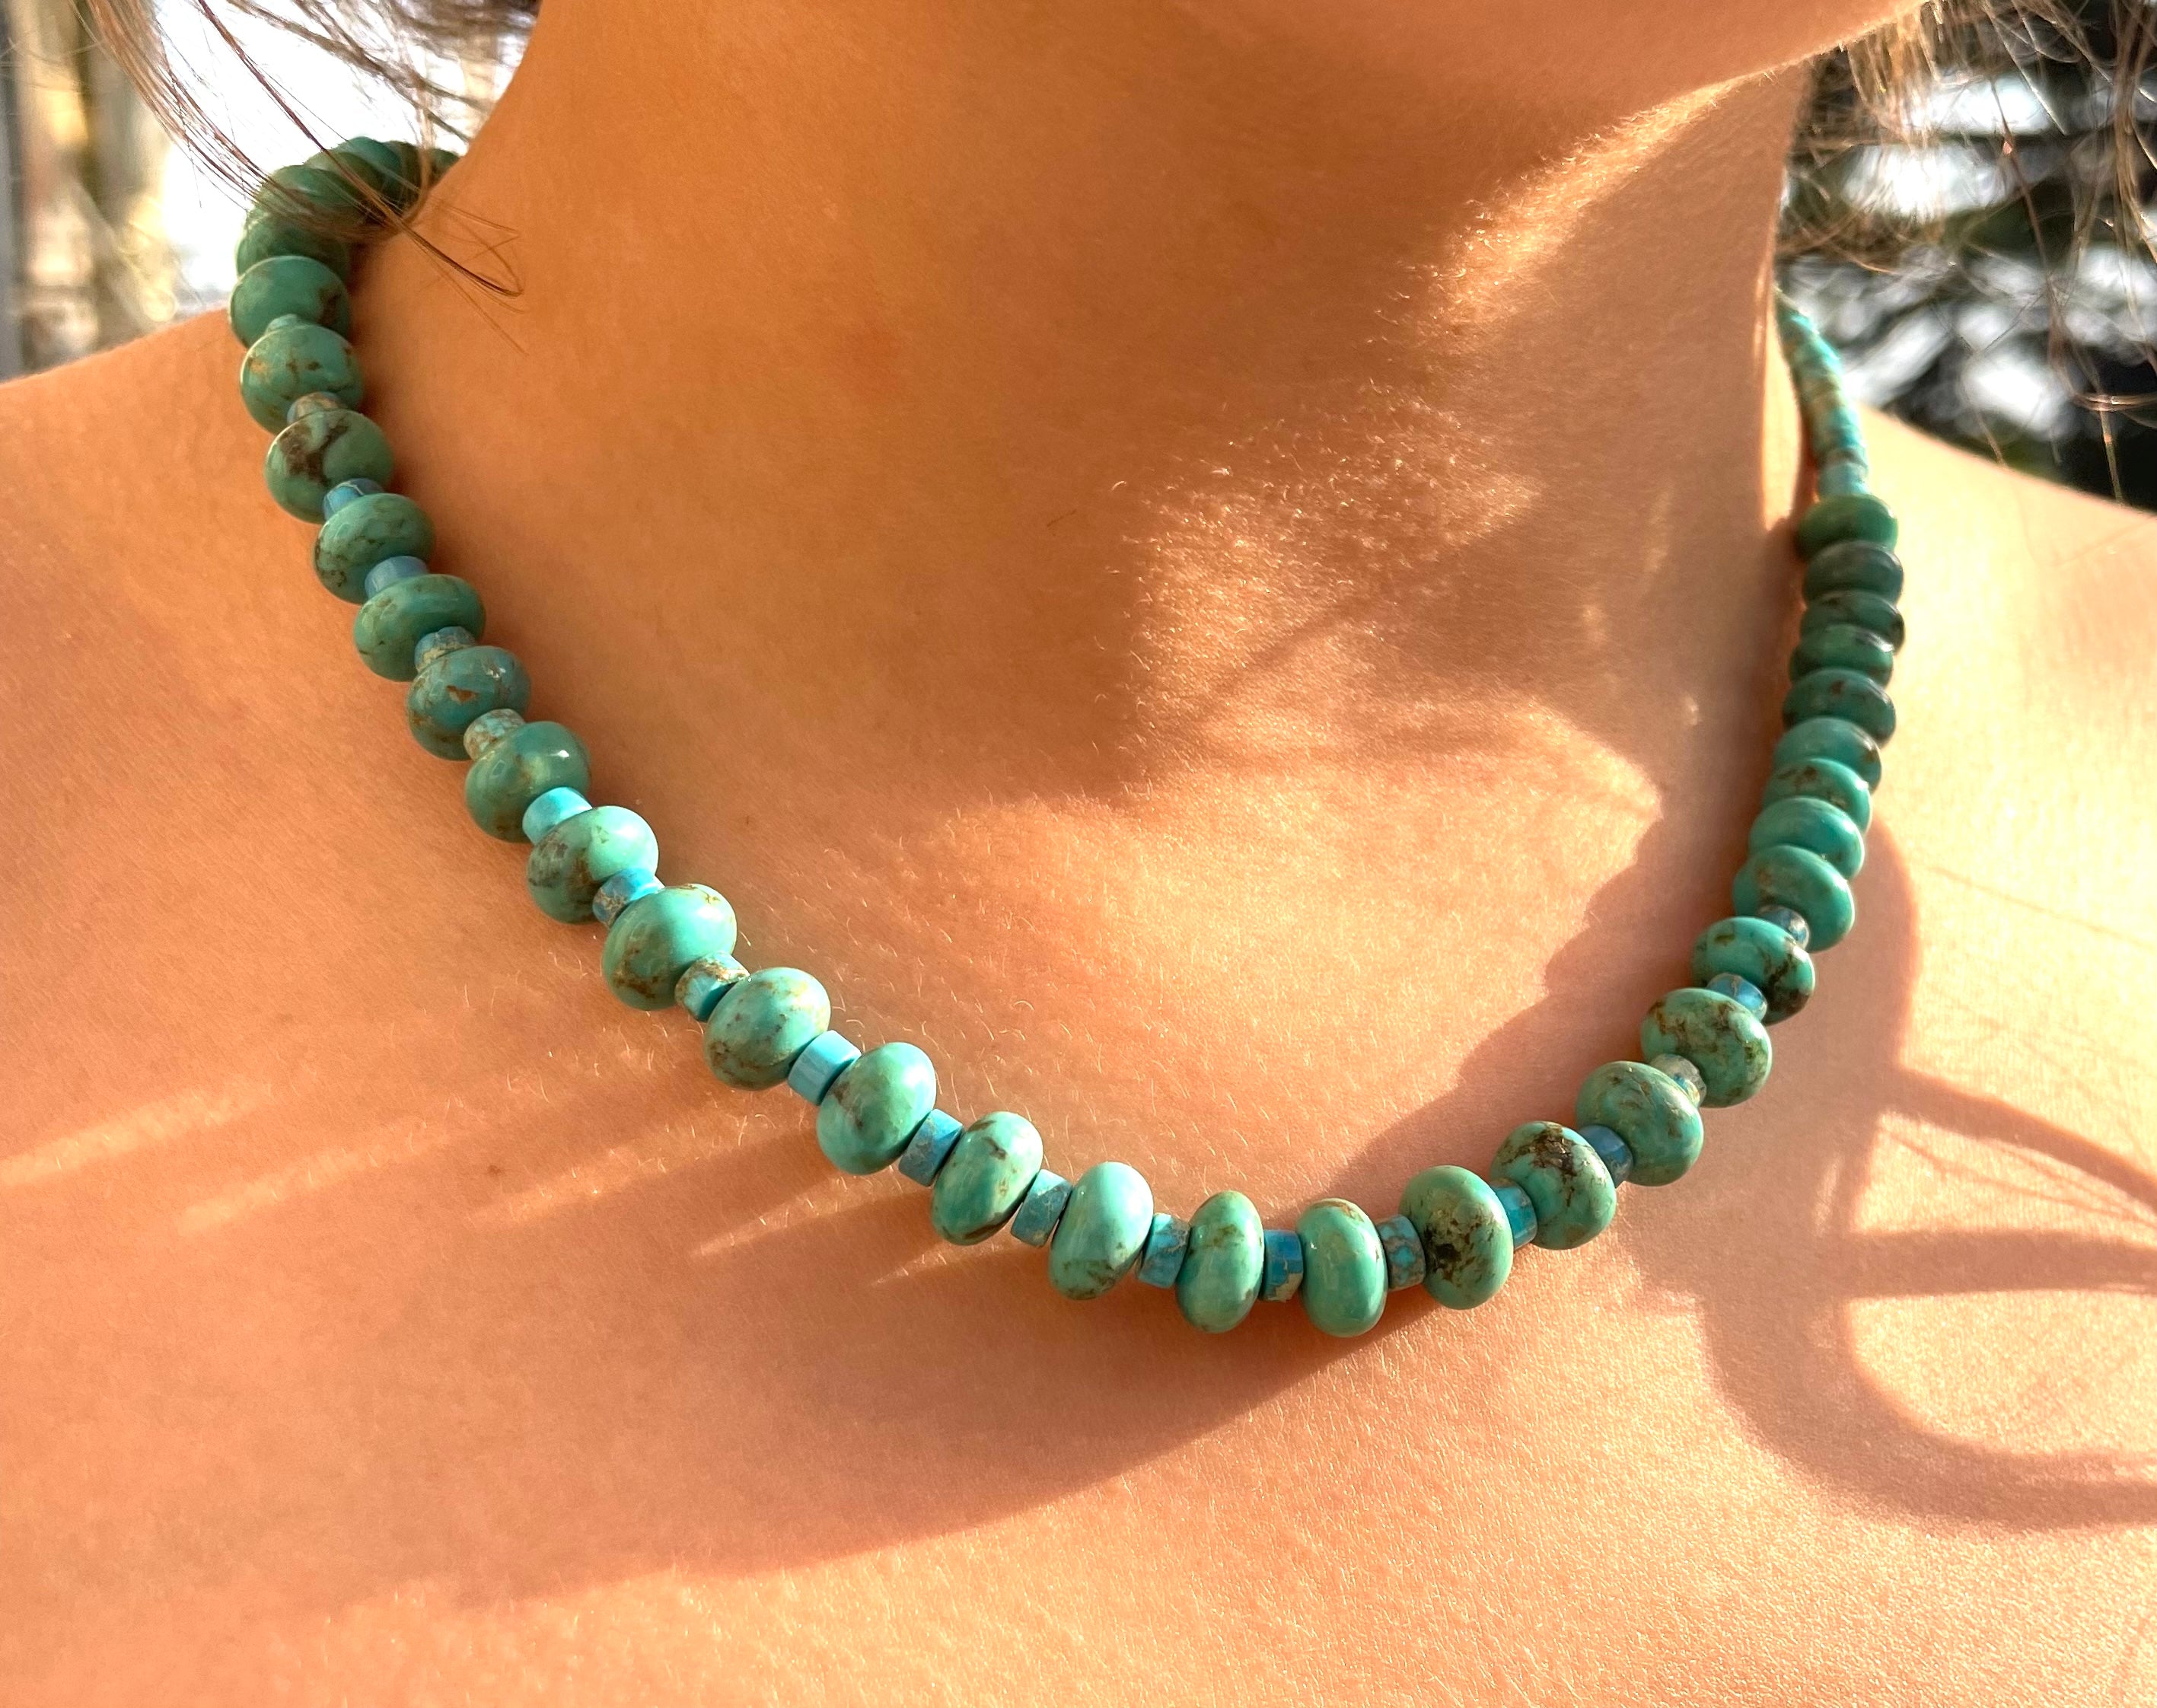 Turquoise necklace round stones